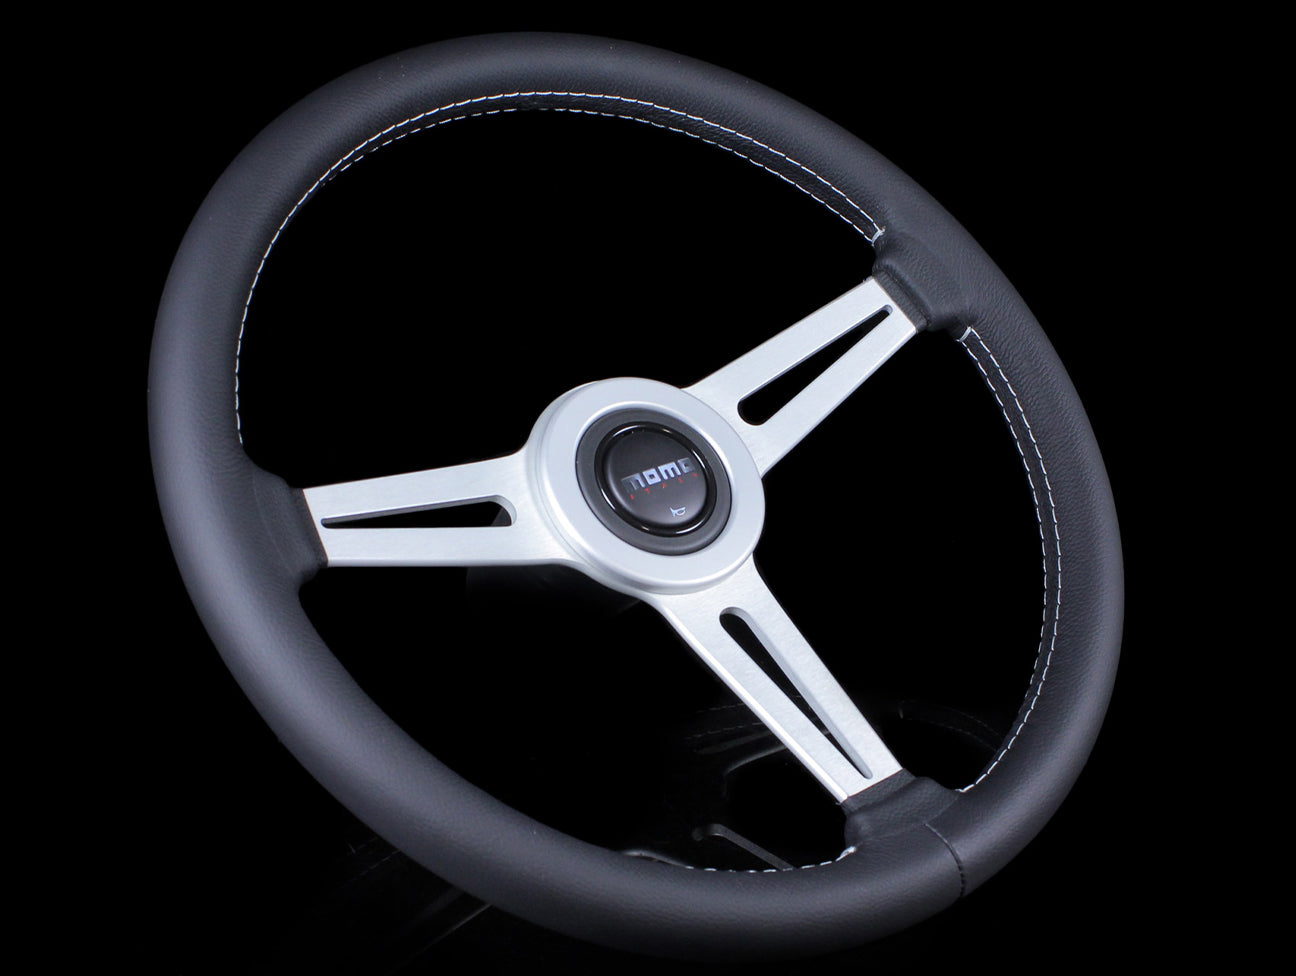 Momo Retro 360mm Steering Wheel